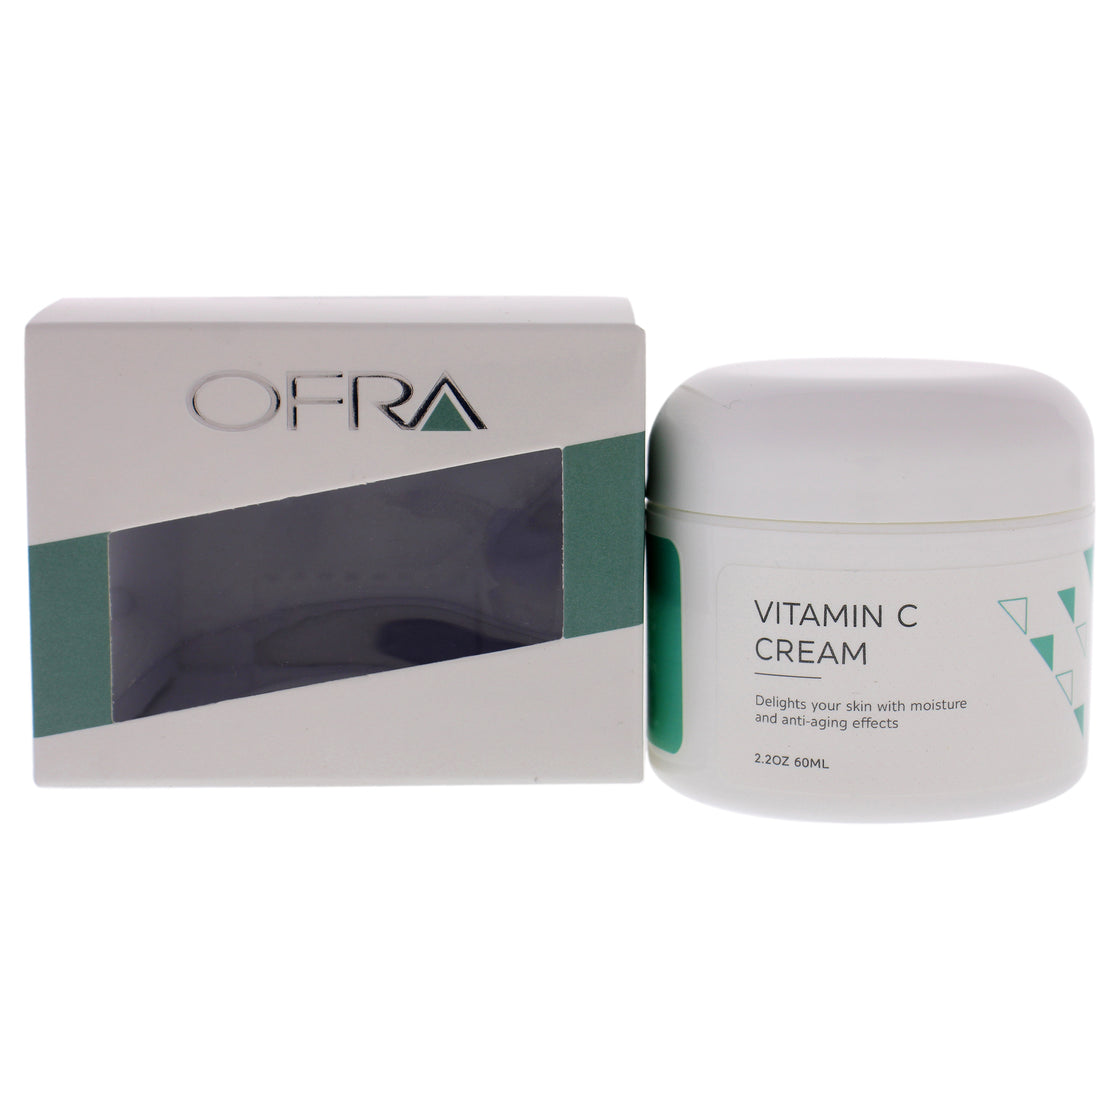 Vitamin C Cream by Ofra for Women - 2.2 oz Cream